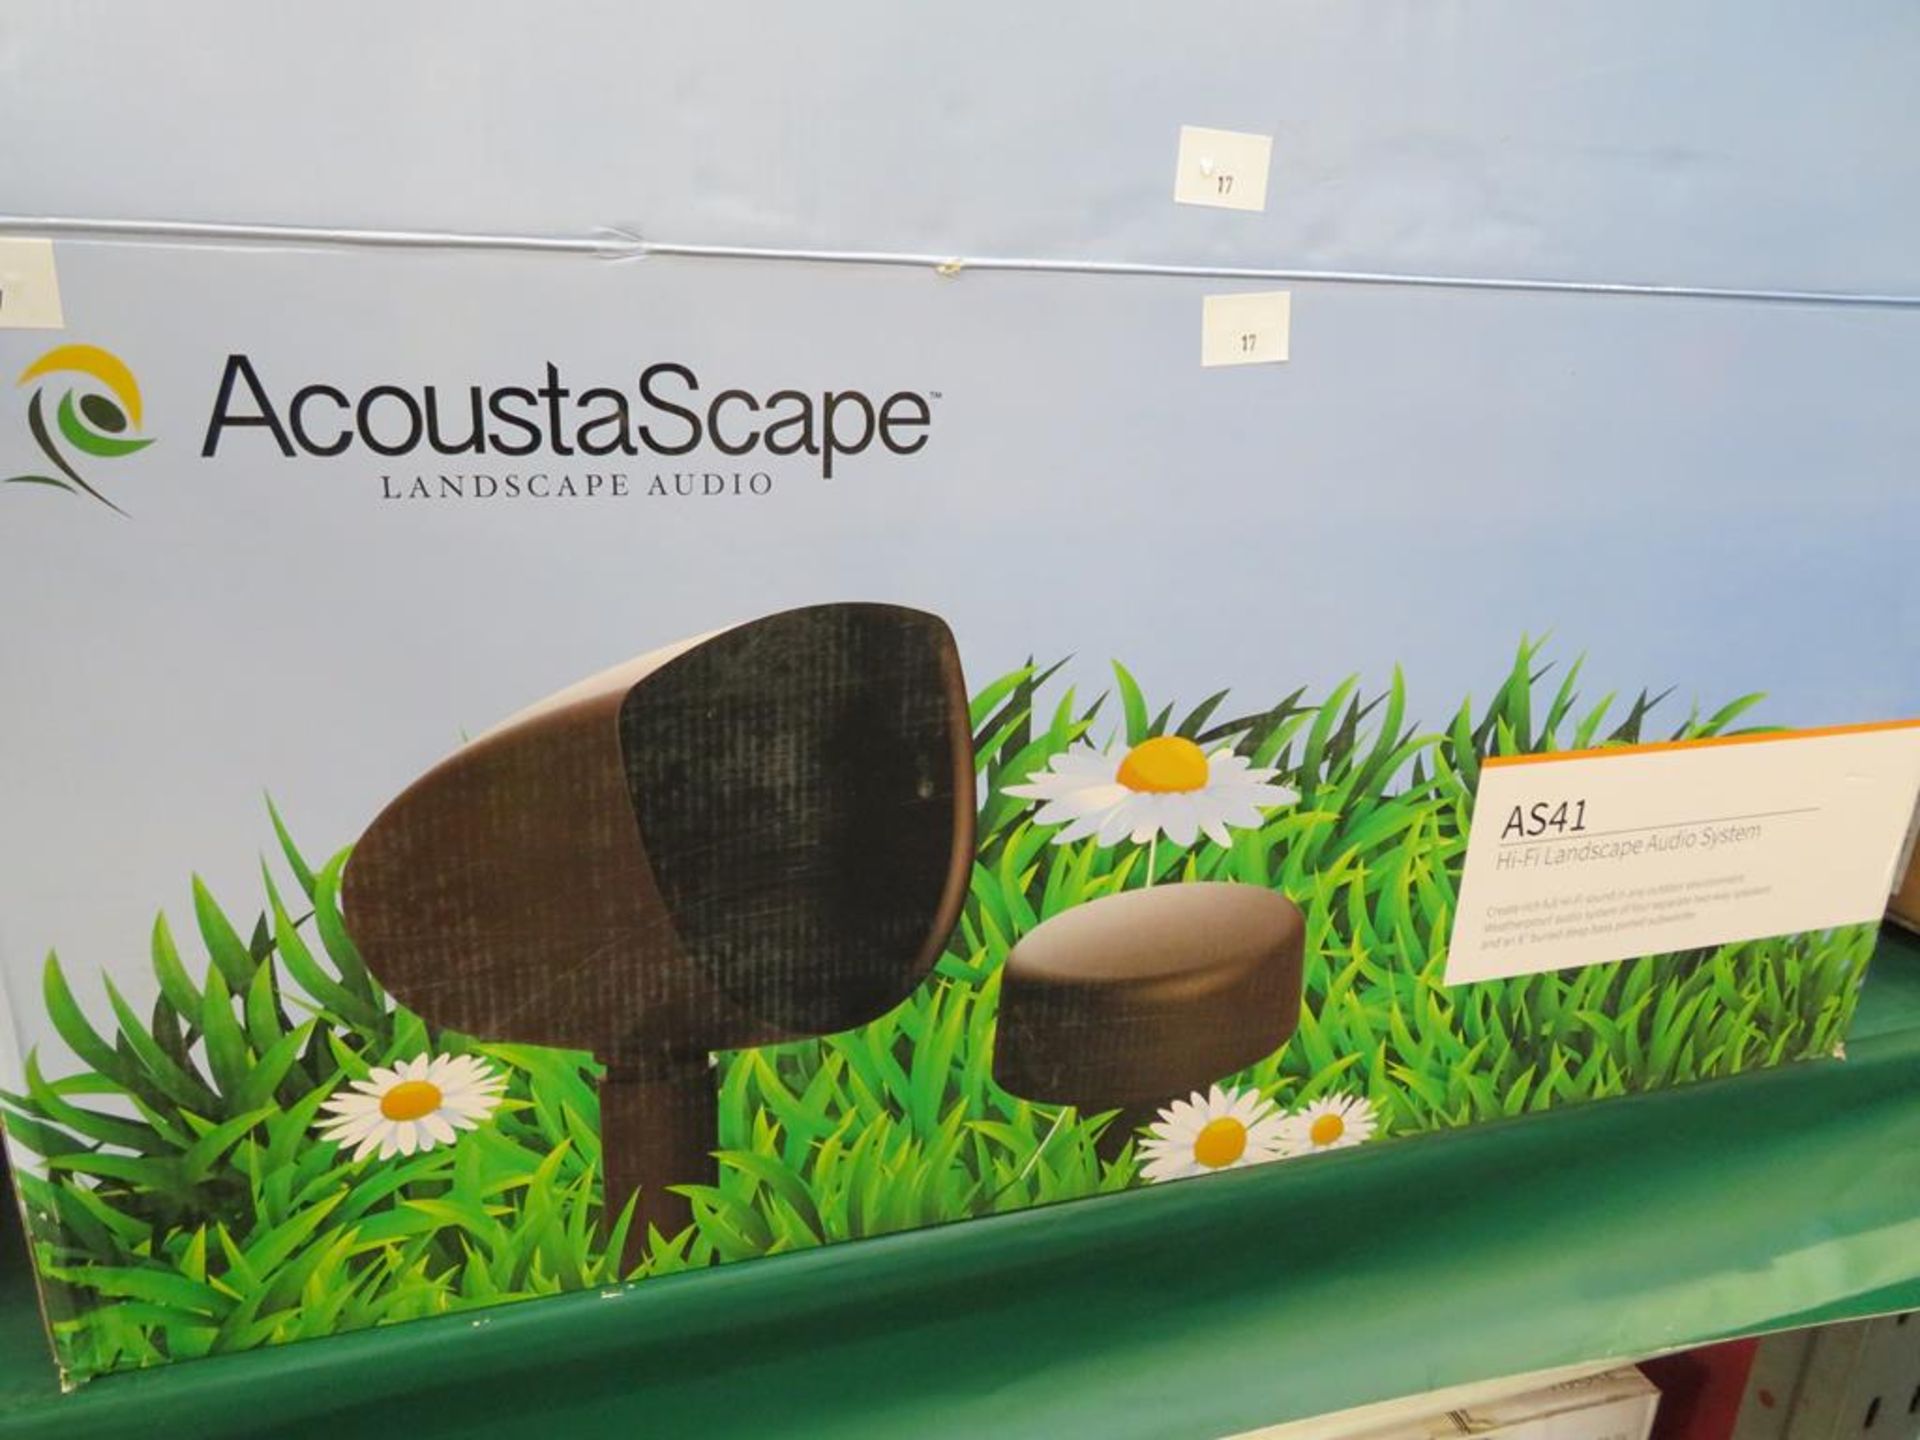 Acoustascape AS41 Hi-Fi Landscape Audio System - Image 4 of 4